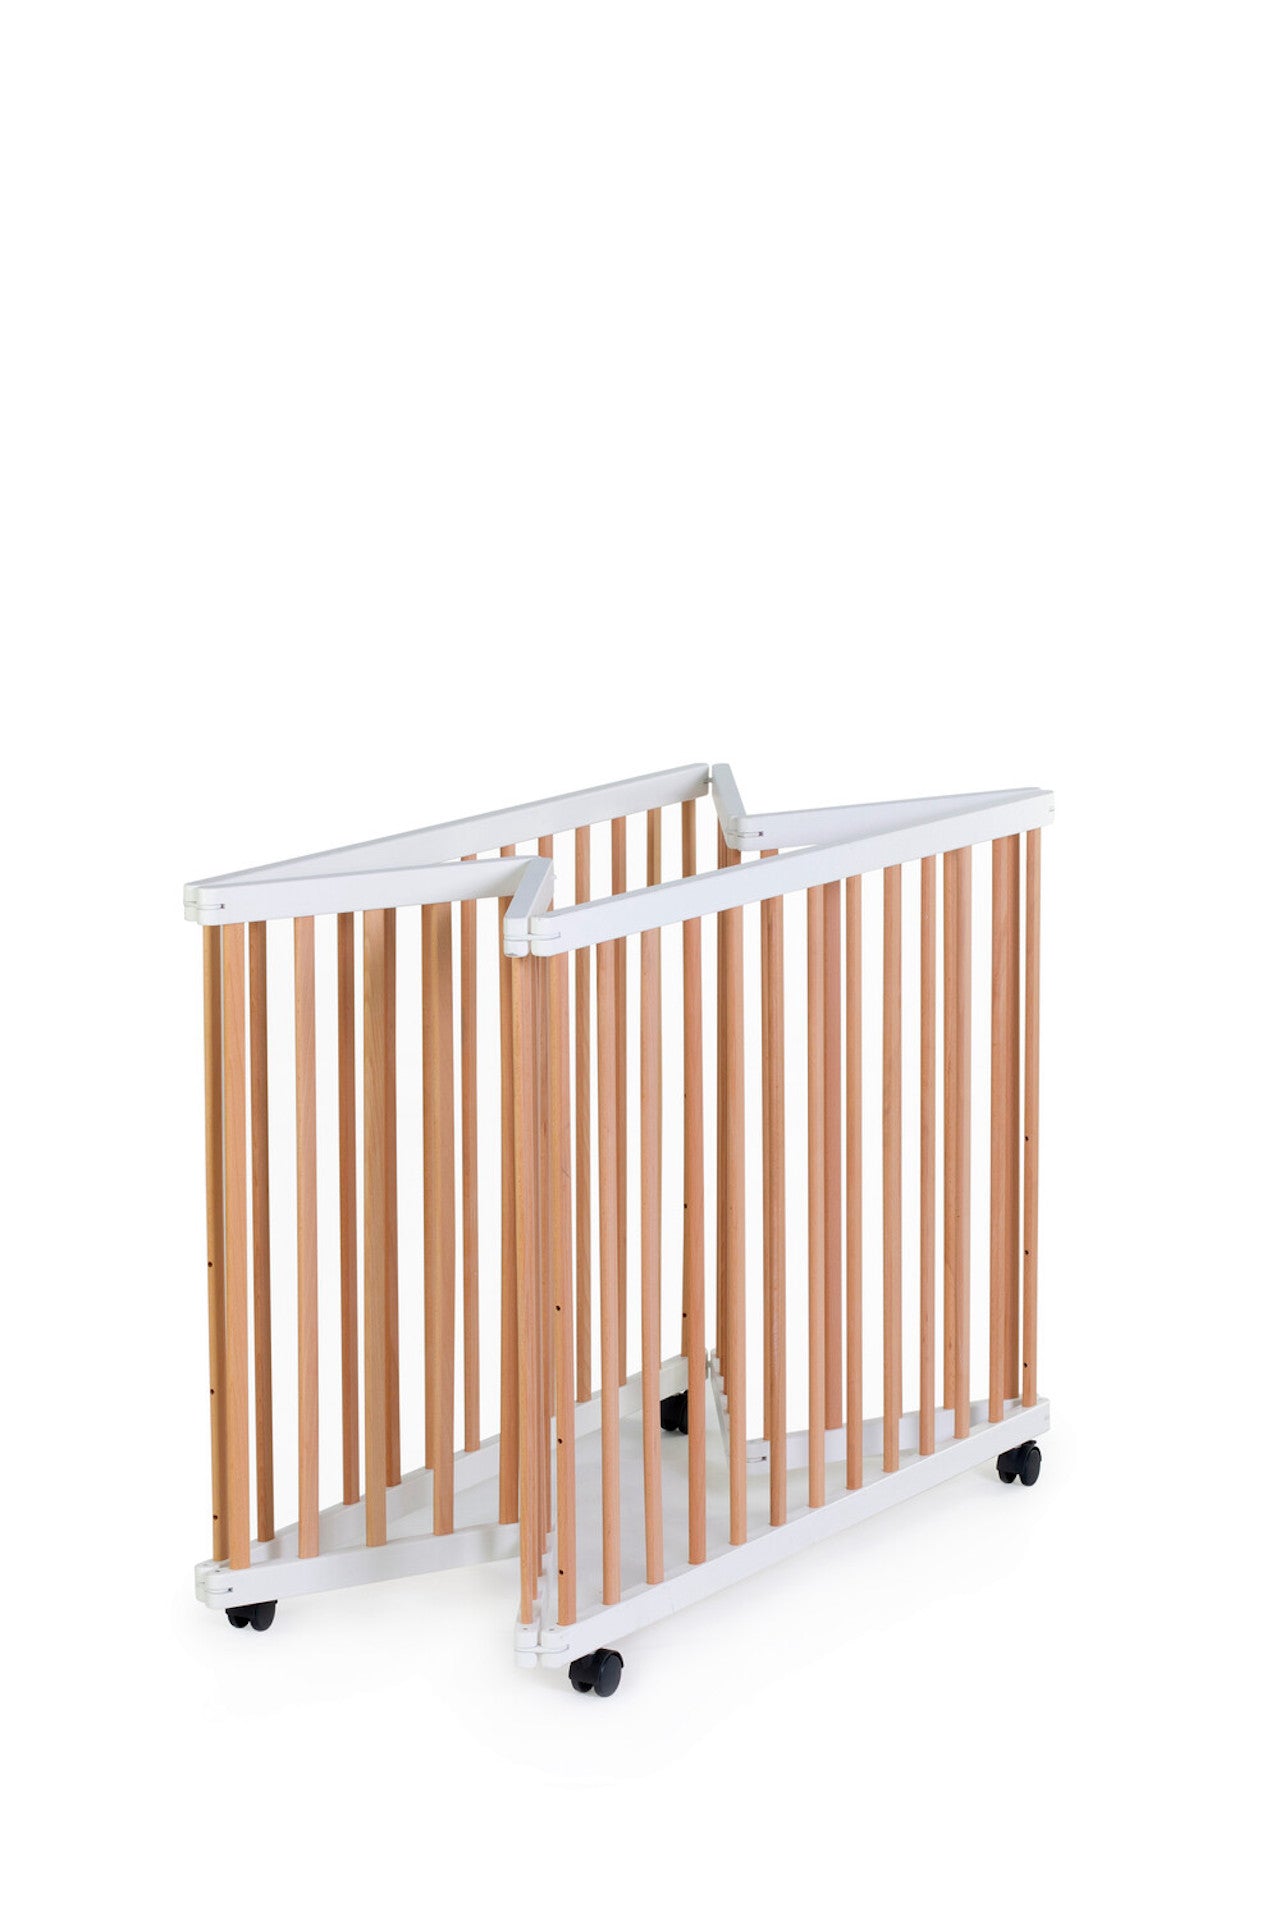 Leon - Foldable Playpen & Crib